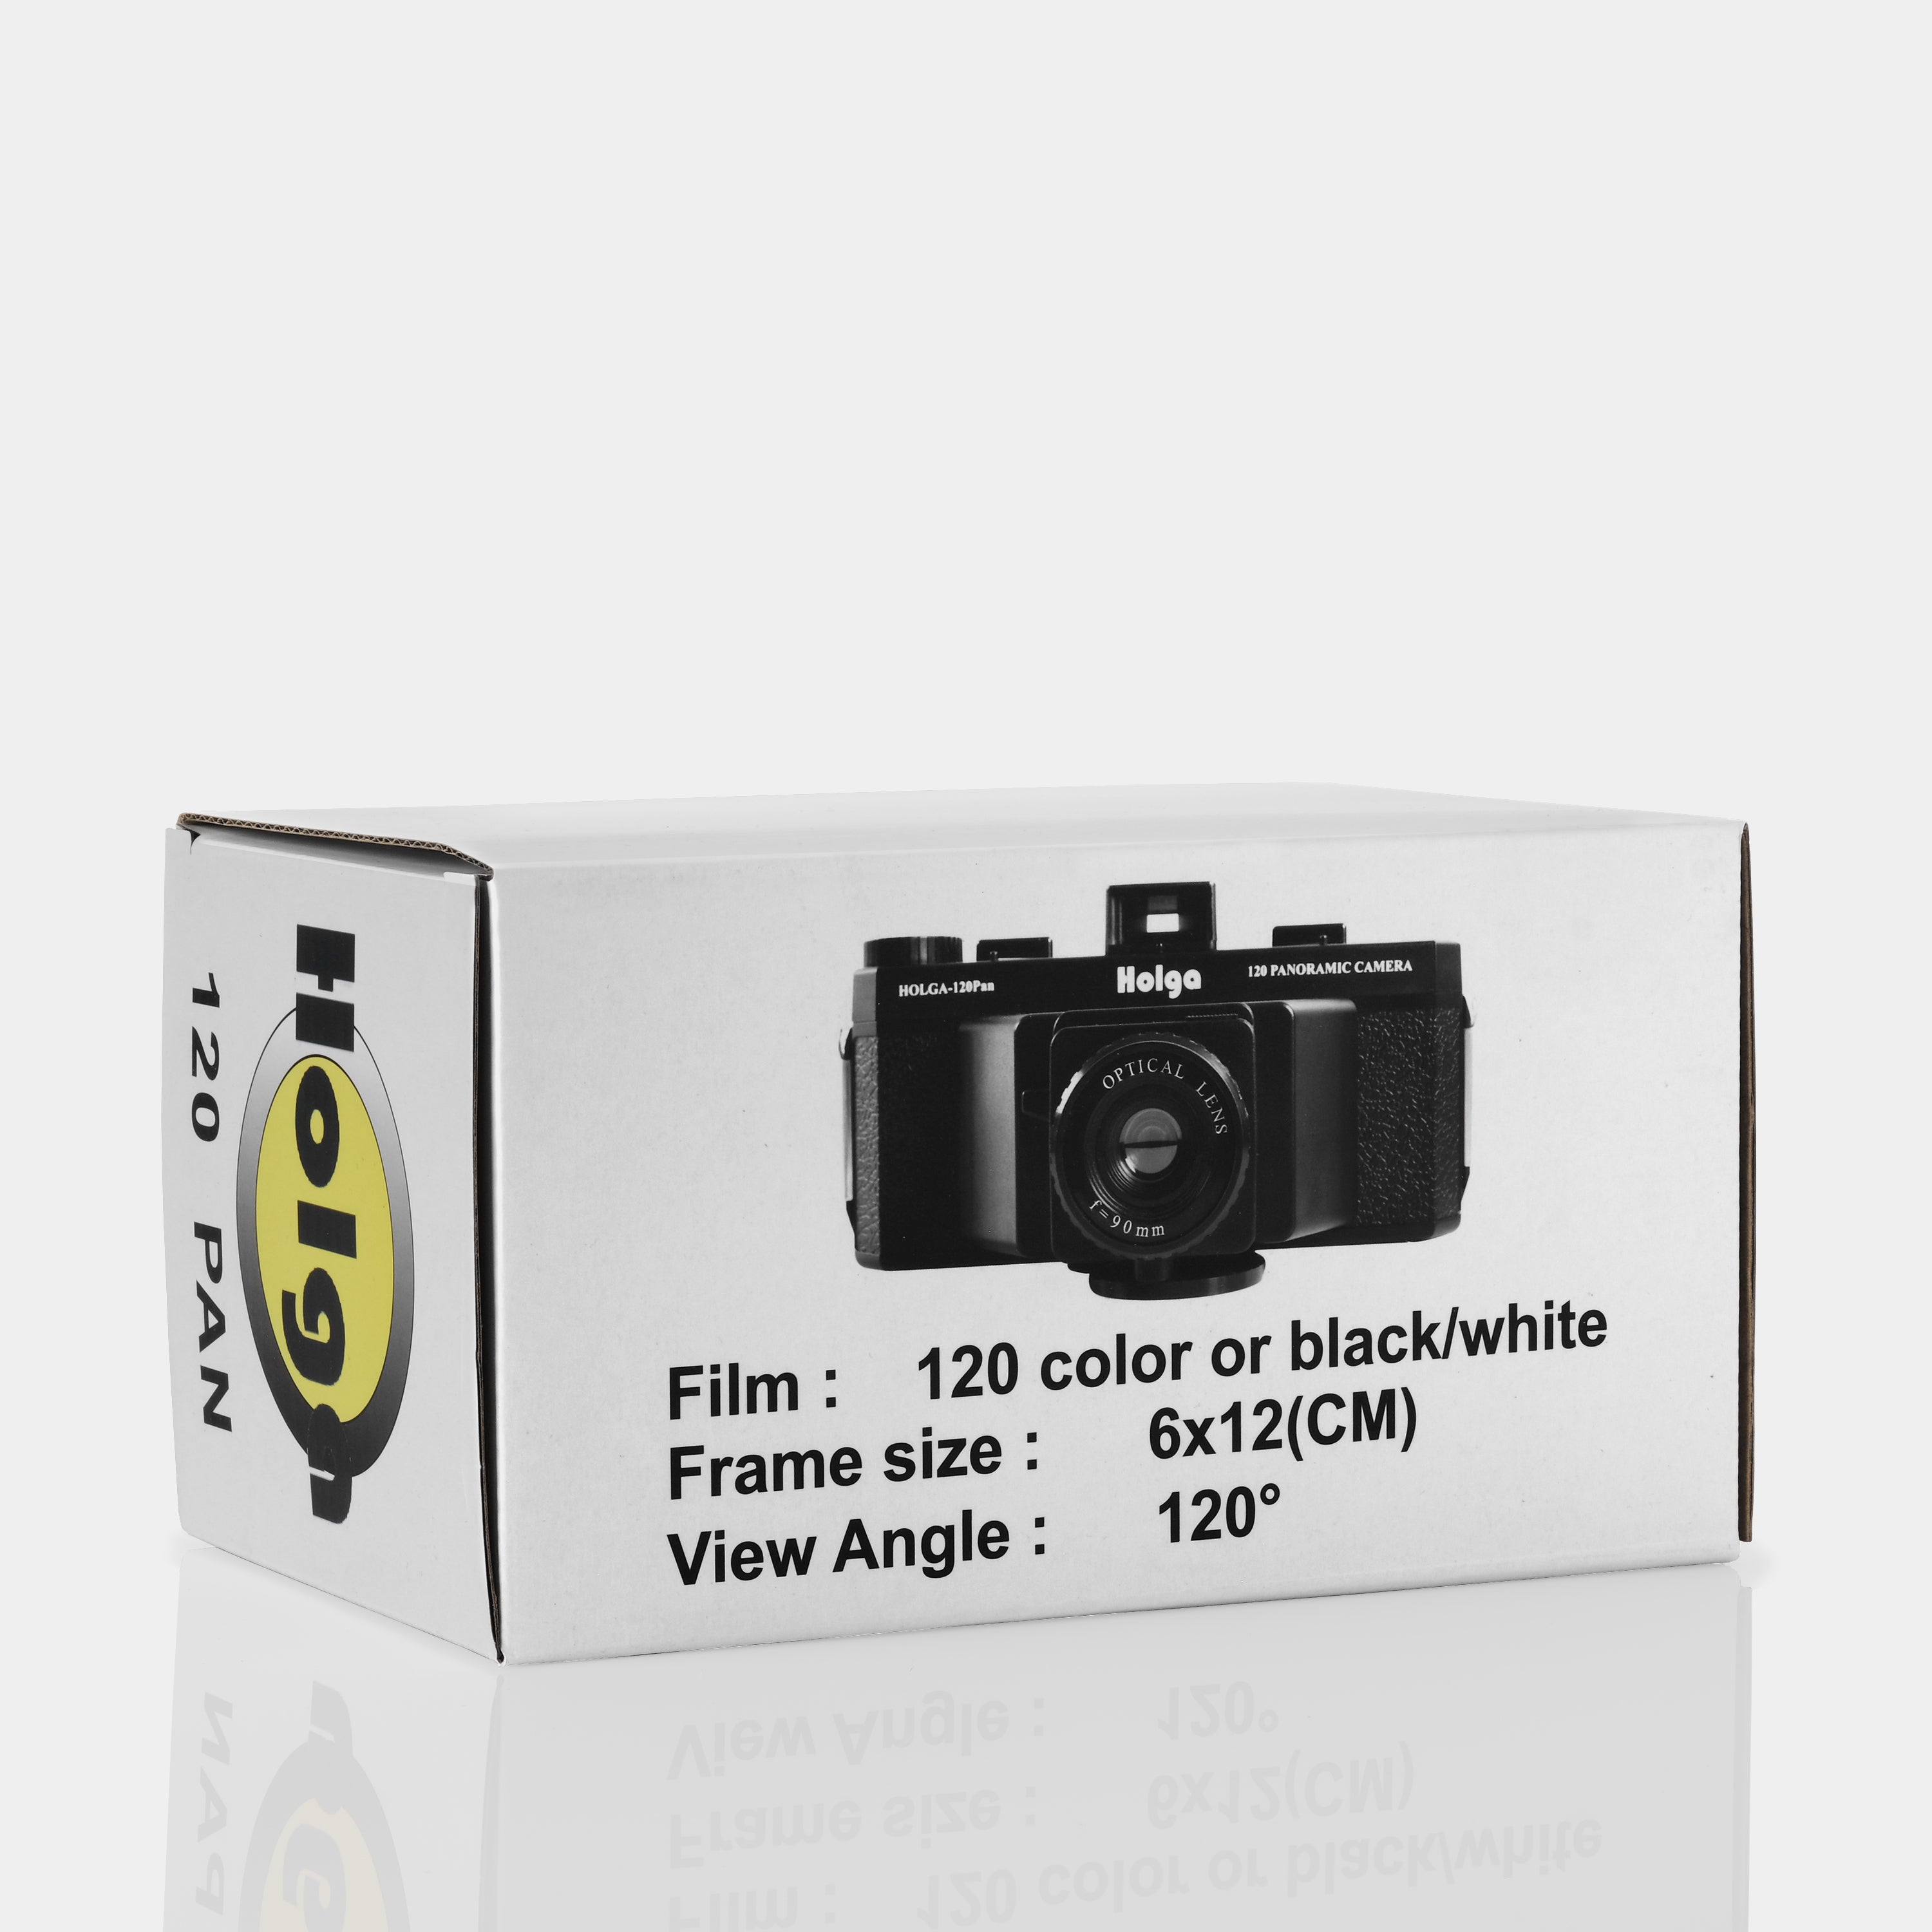 Holga 120 Pan Panoramic Medium Format Camera